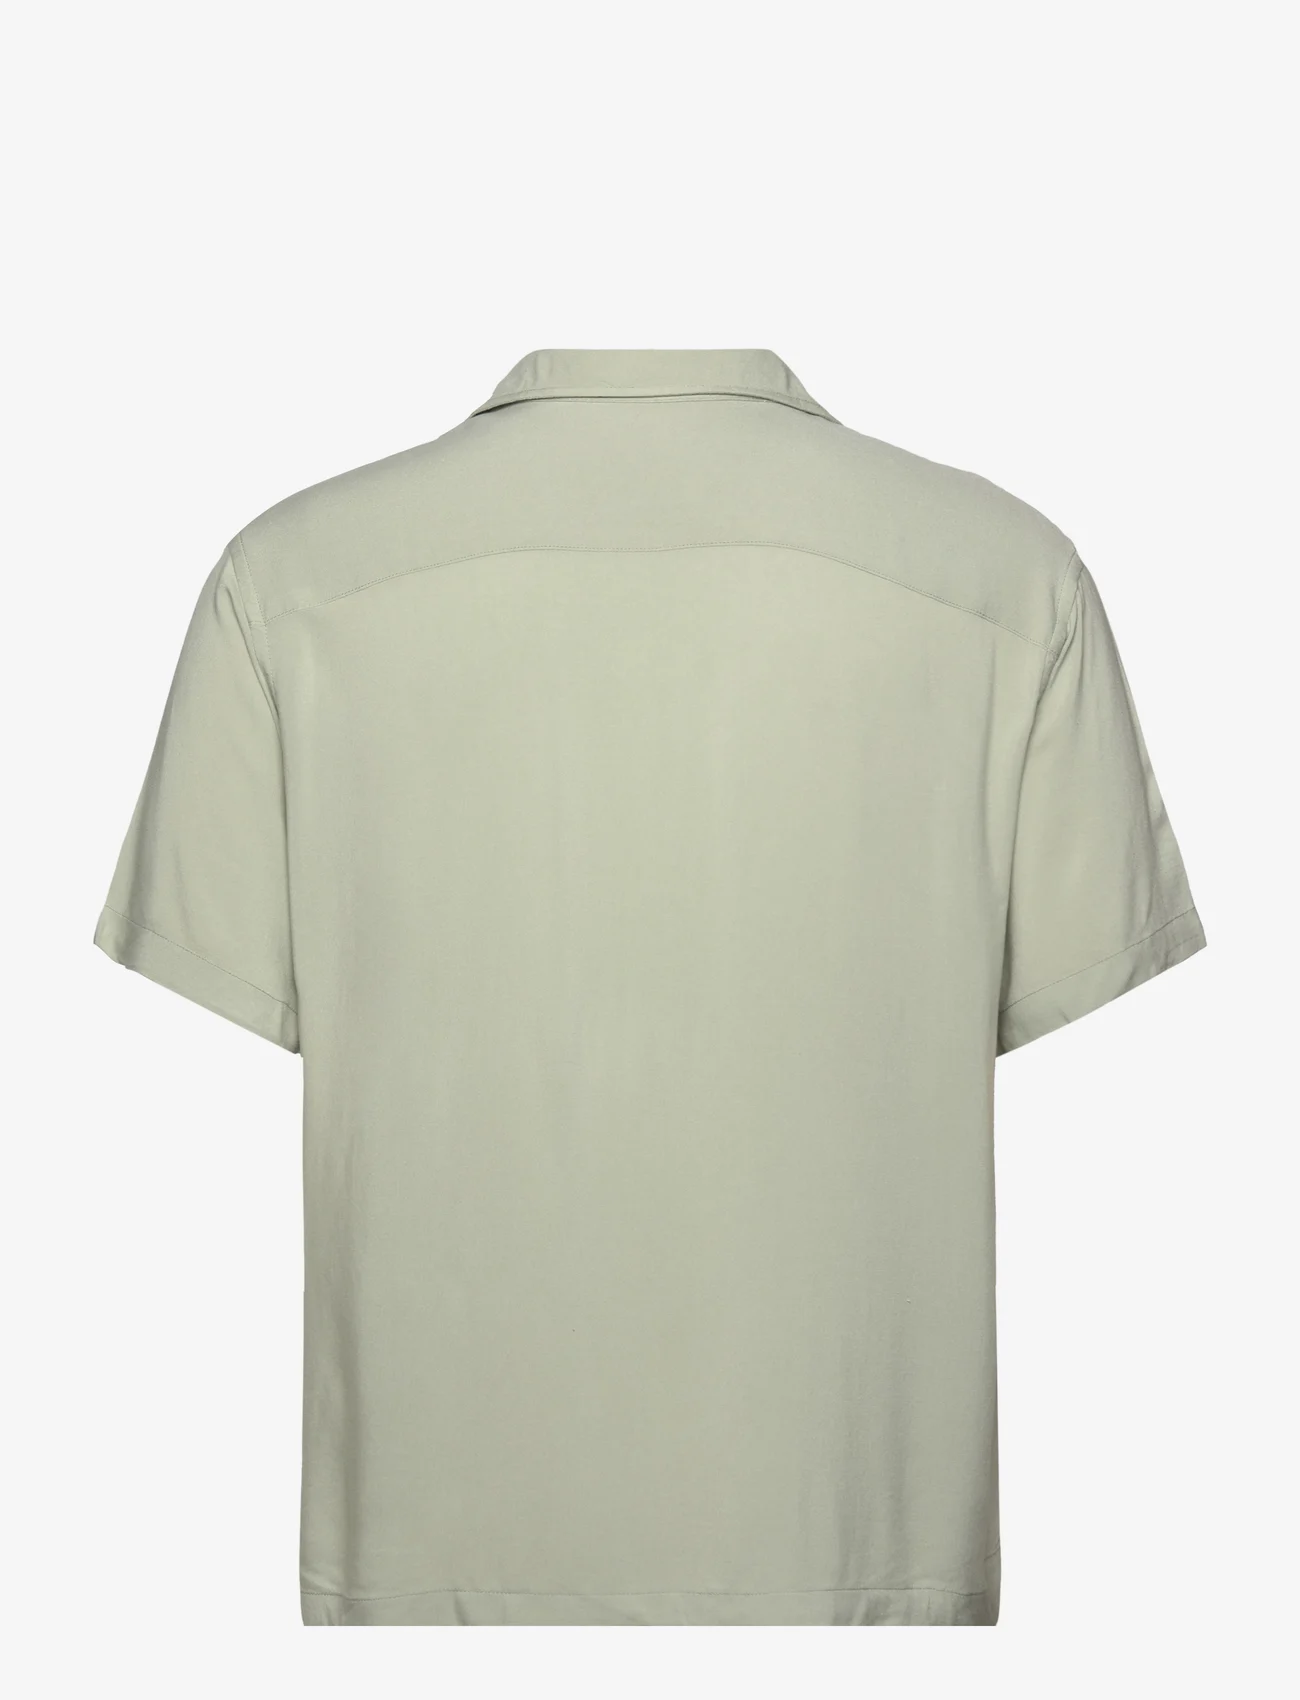 Jack & Jones - JJEJEFF SOLID RESORT SHIRT SS SN - kortärmade t-shirts - desert sage - 1